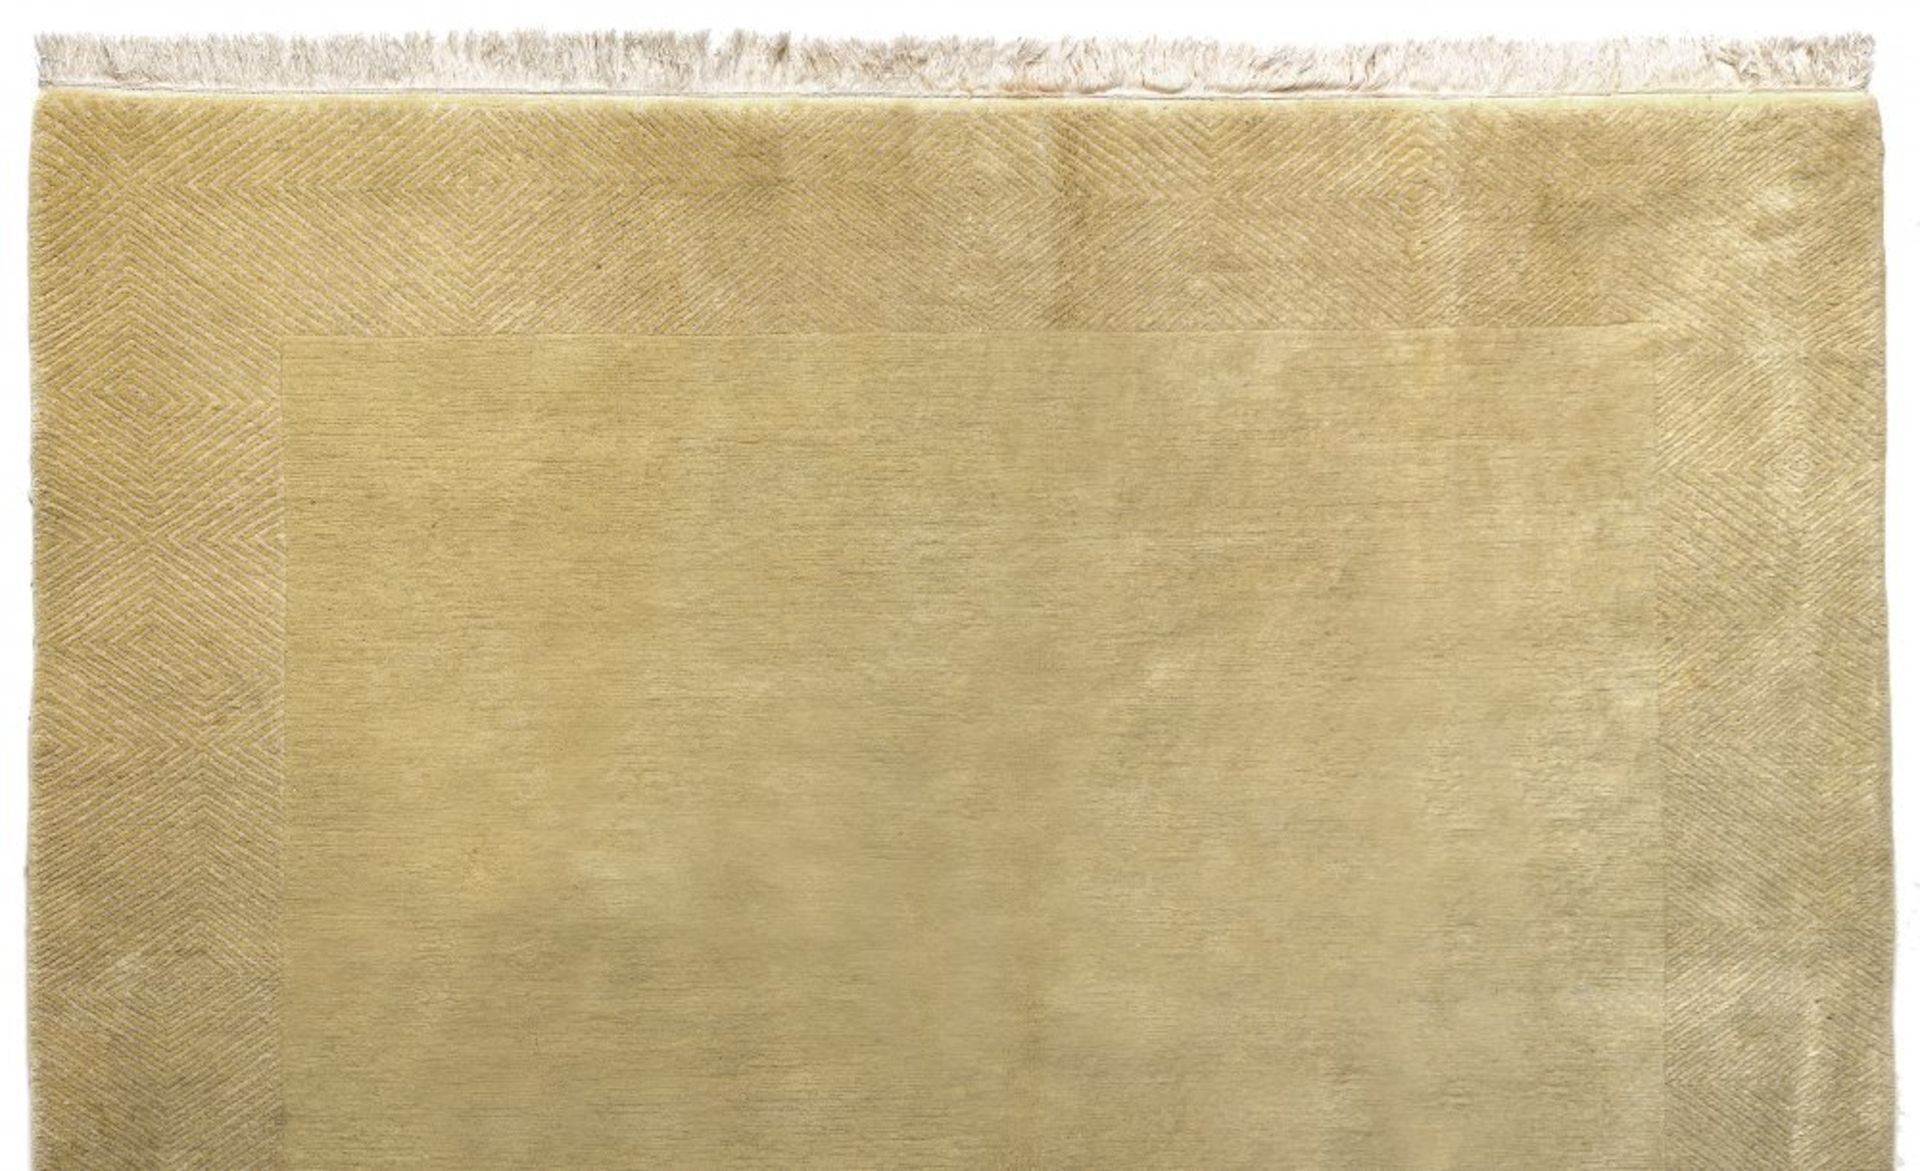 TeppichChina, 20. Jh. Wolle. 223 x 283 cm.carpetChina, 20th century Wool. 223 x 283 cm.- - -27.